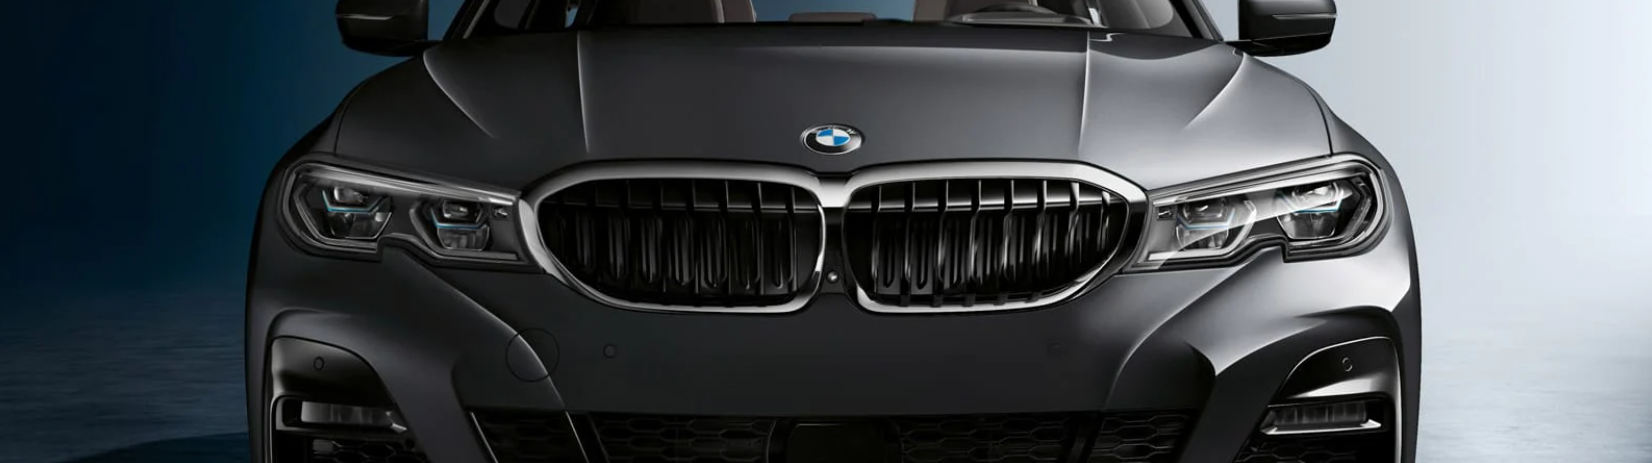 black BMW 3 series parked with a dark background